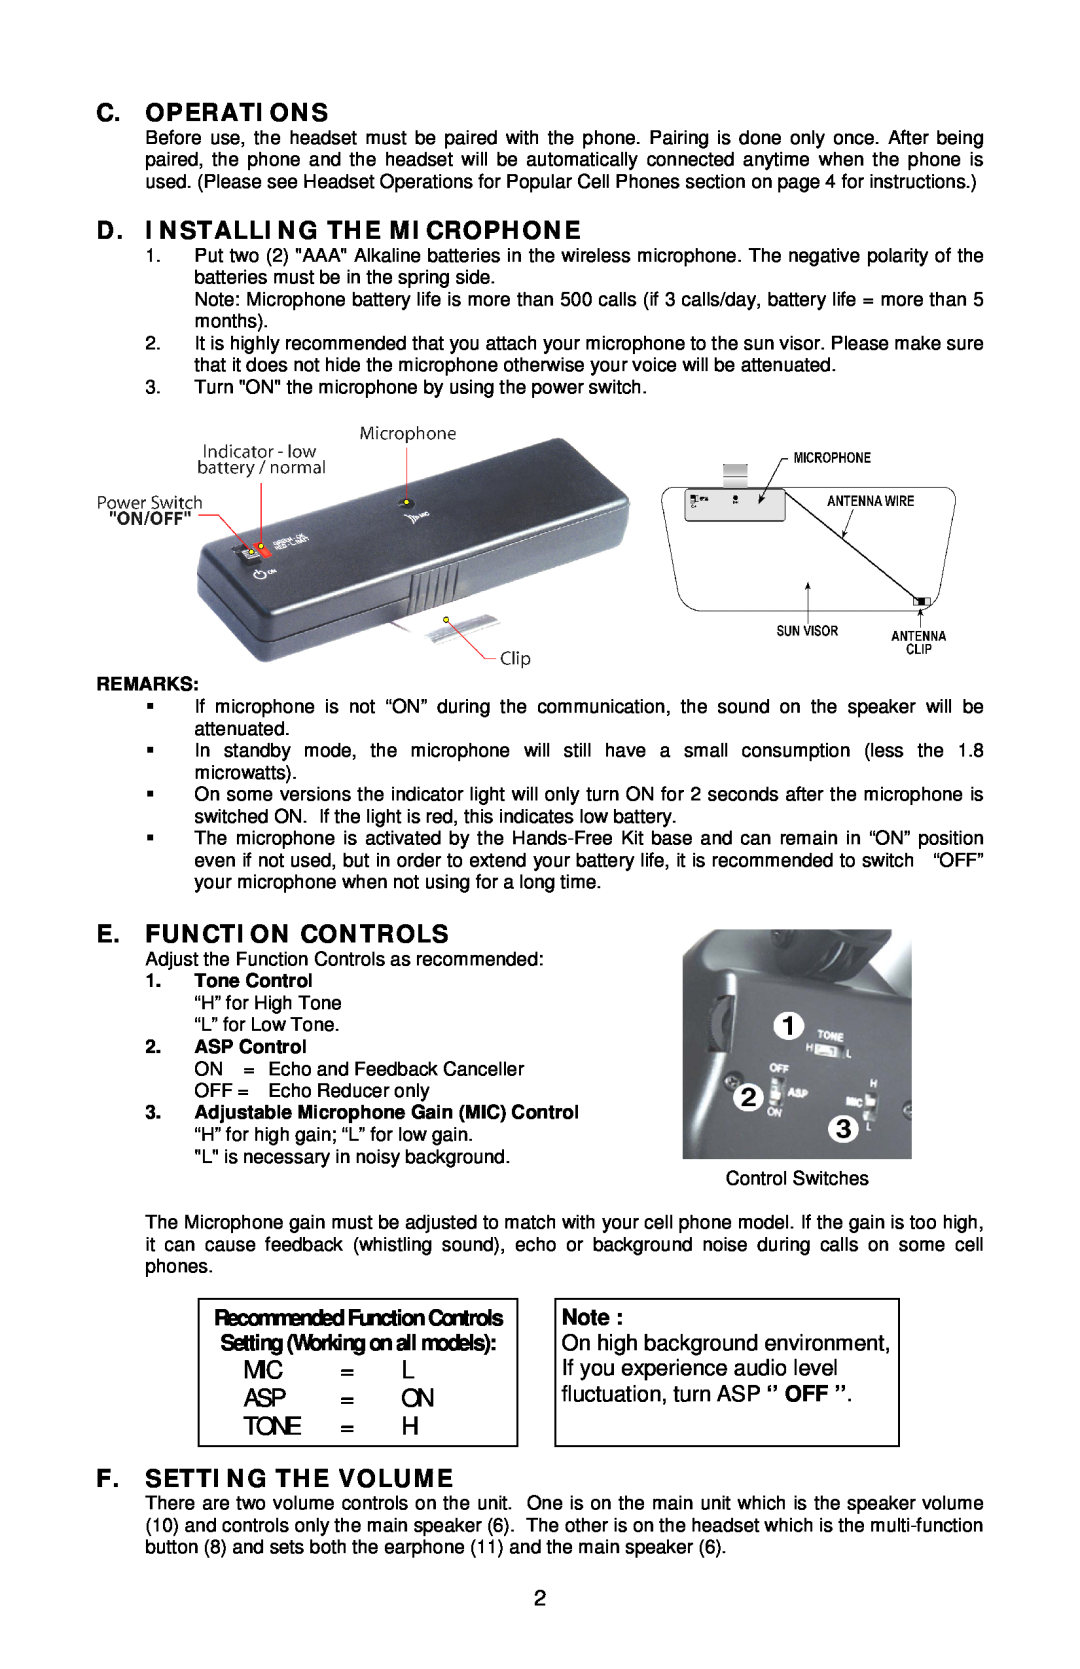 Sony Ericsson Bluetooth Enabled Hands-Free Kit /Headset manual C.Operati On S, D . I N Stalli N G Th E M I Croph On E, Tone 